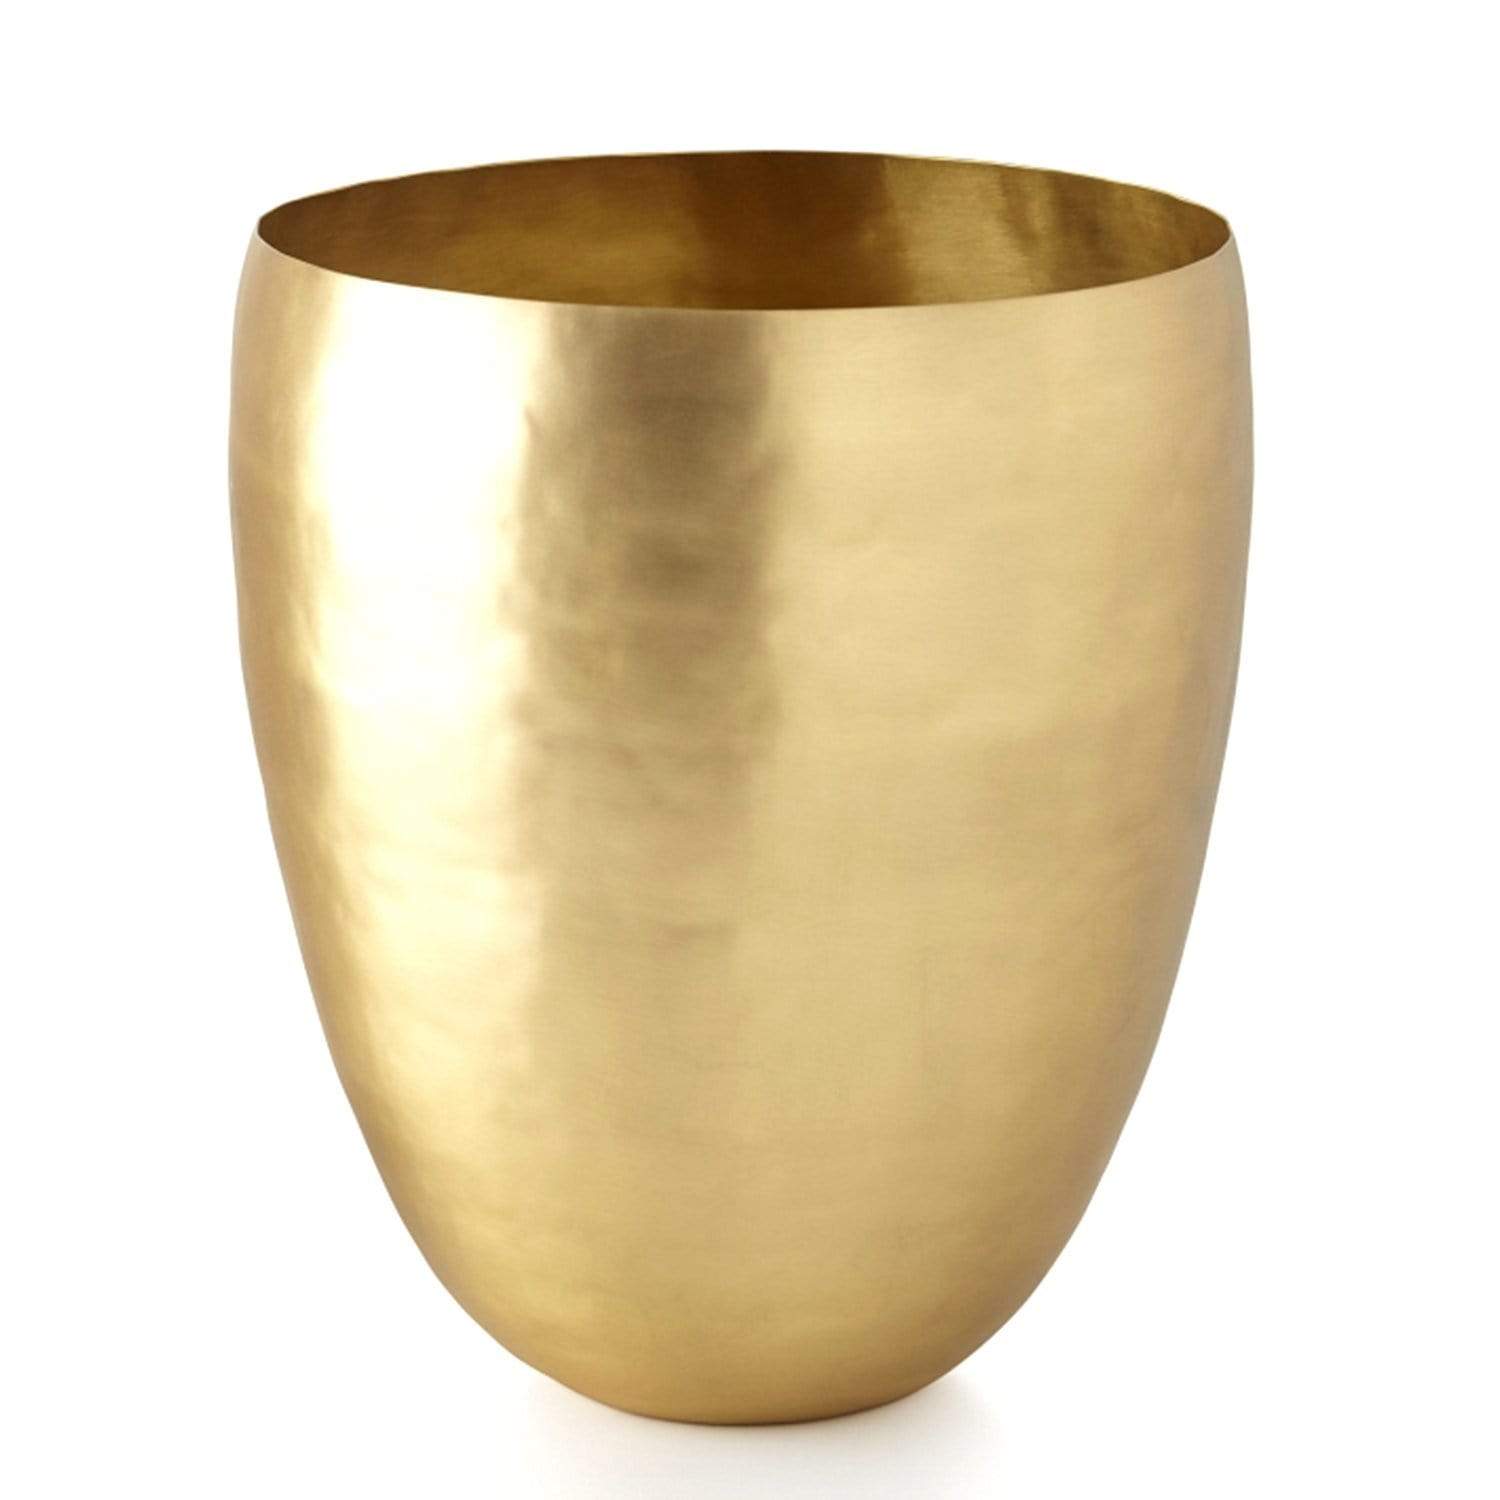 Kassatex Nile Brass Waste Basket - Gold - ANL-WB - Jashanmal Home